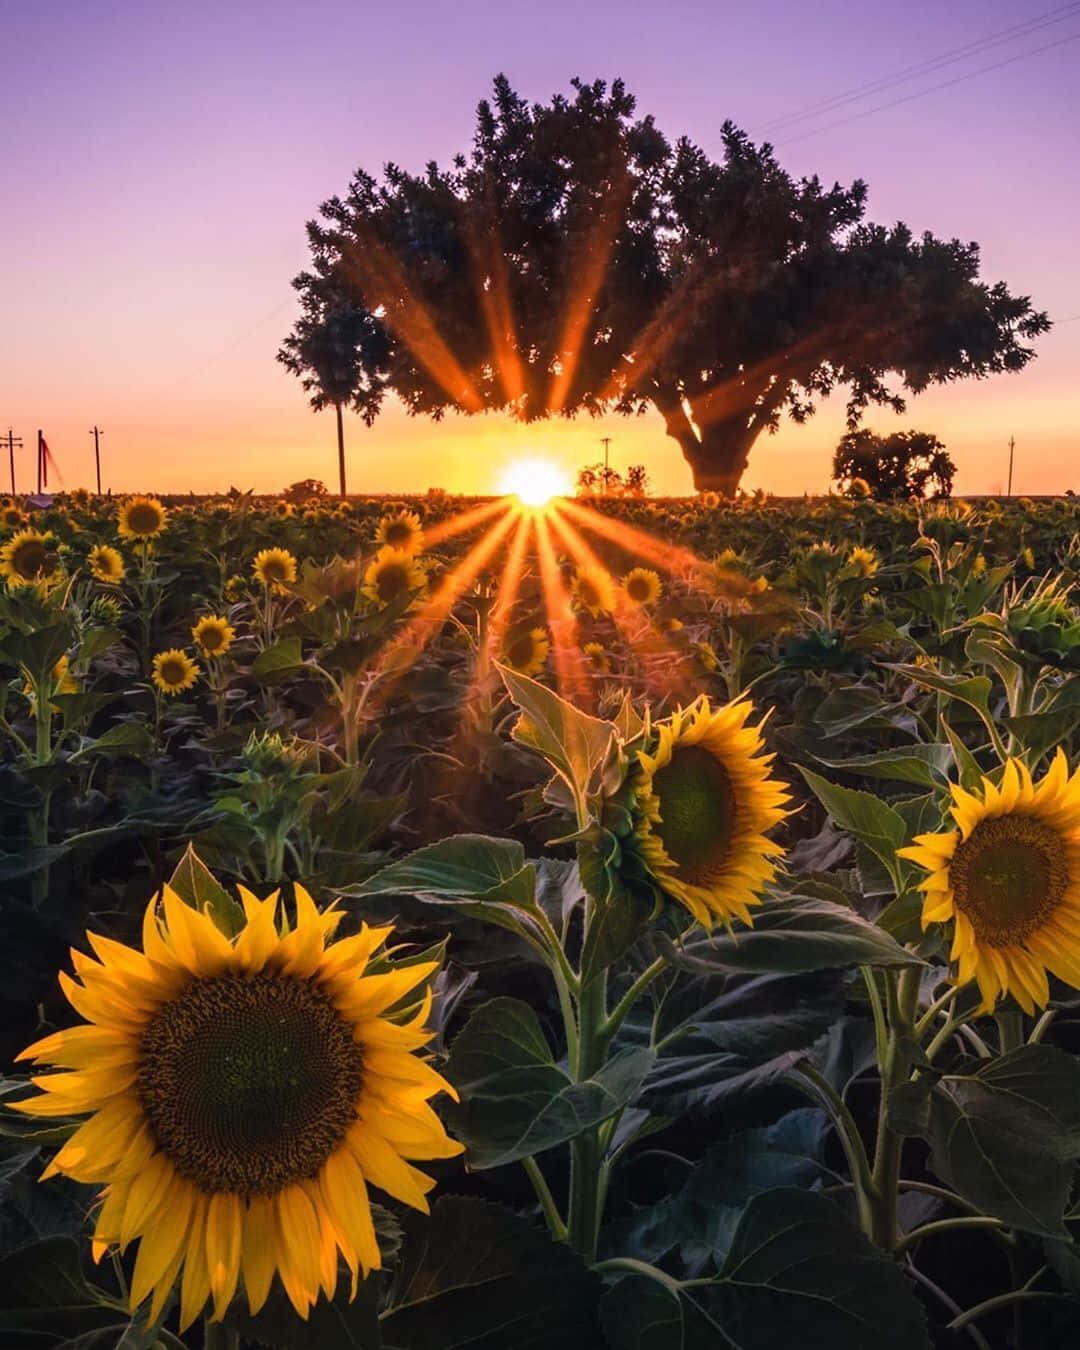 A beautiful sunflower glowing in the summer sun